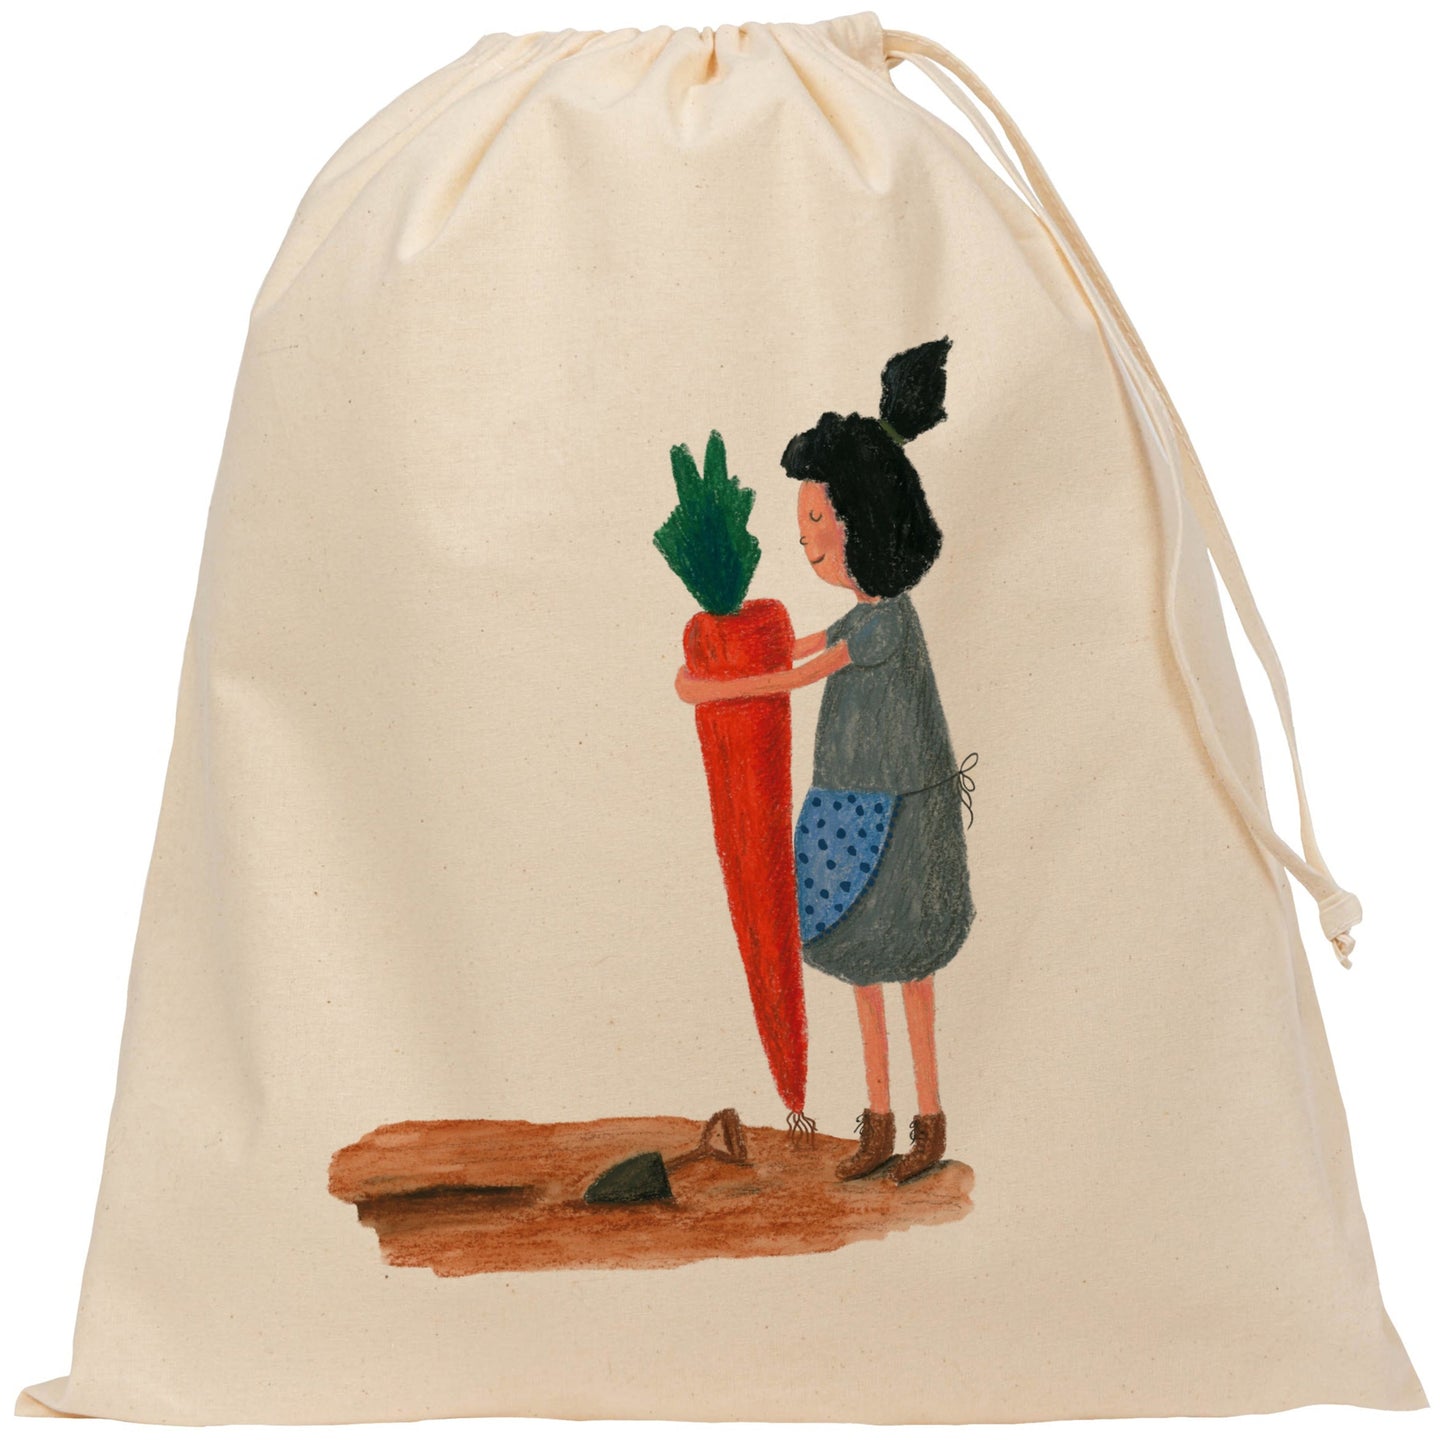 Gardening drawstring bag